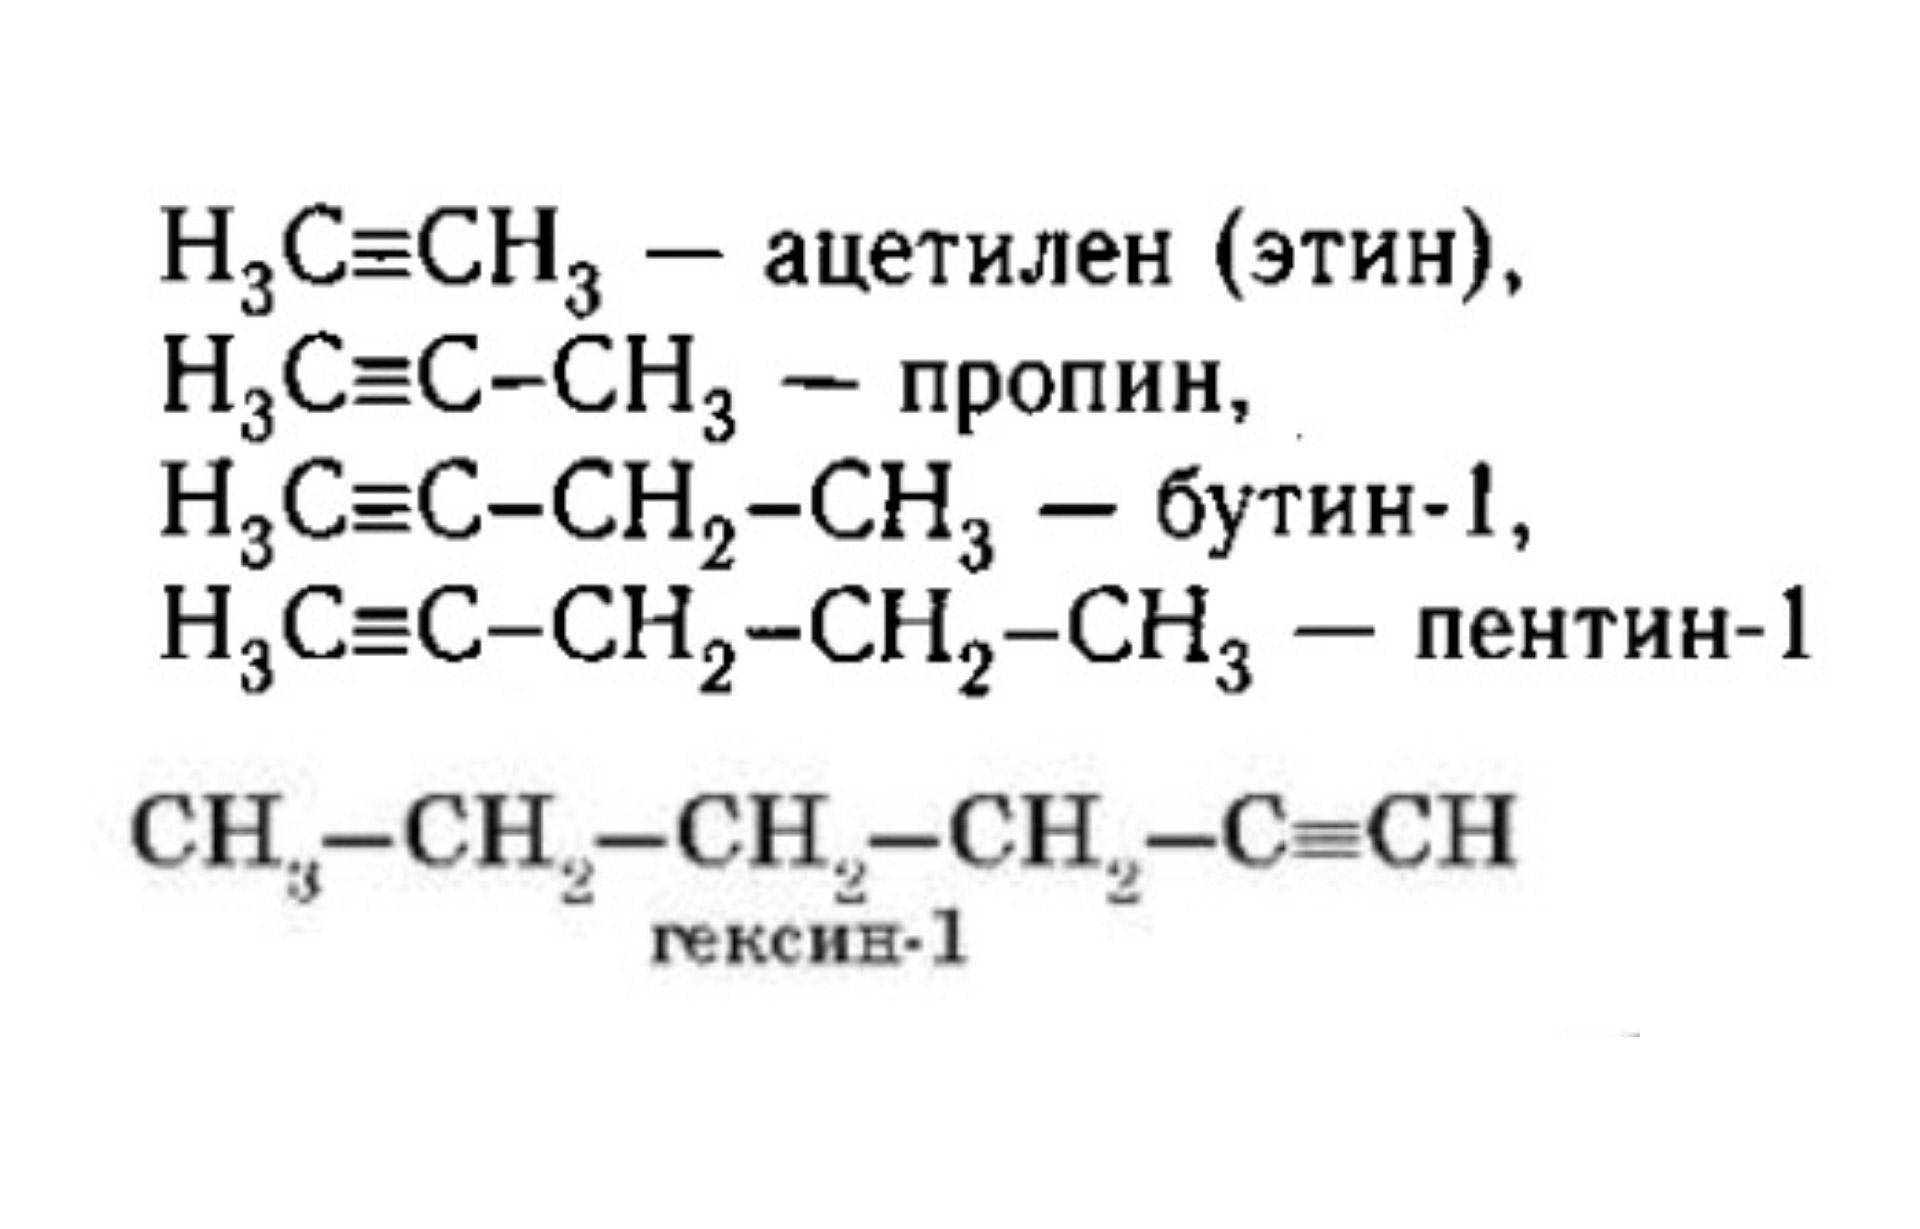 Бутин 2 алкин. Ацетилен+2ch2o. Ацетилен формула. Ацетилен в Бутин. Этин пропин Бутин.